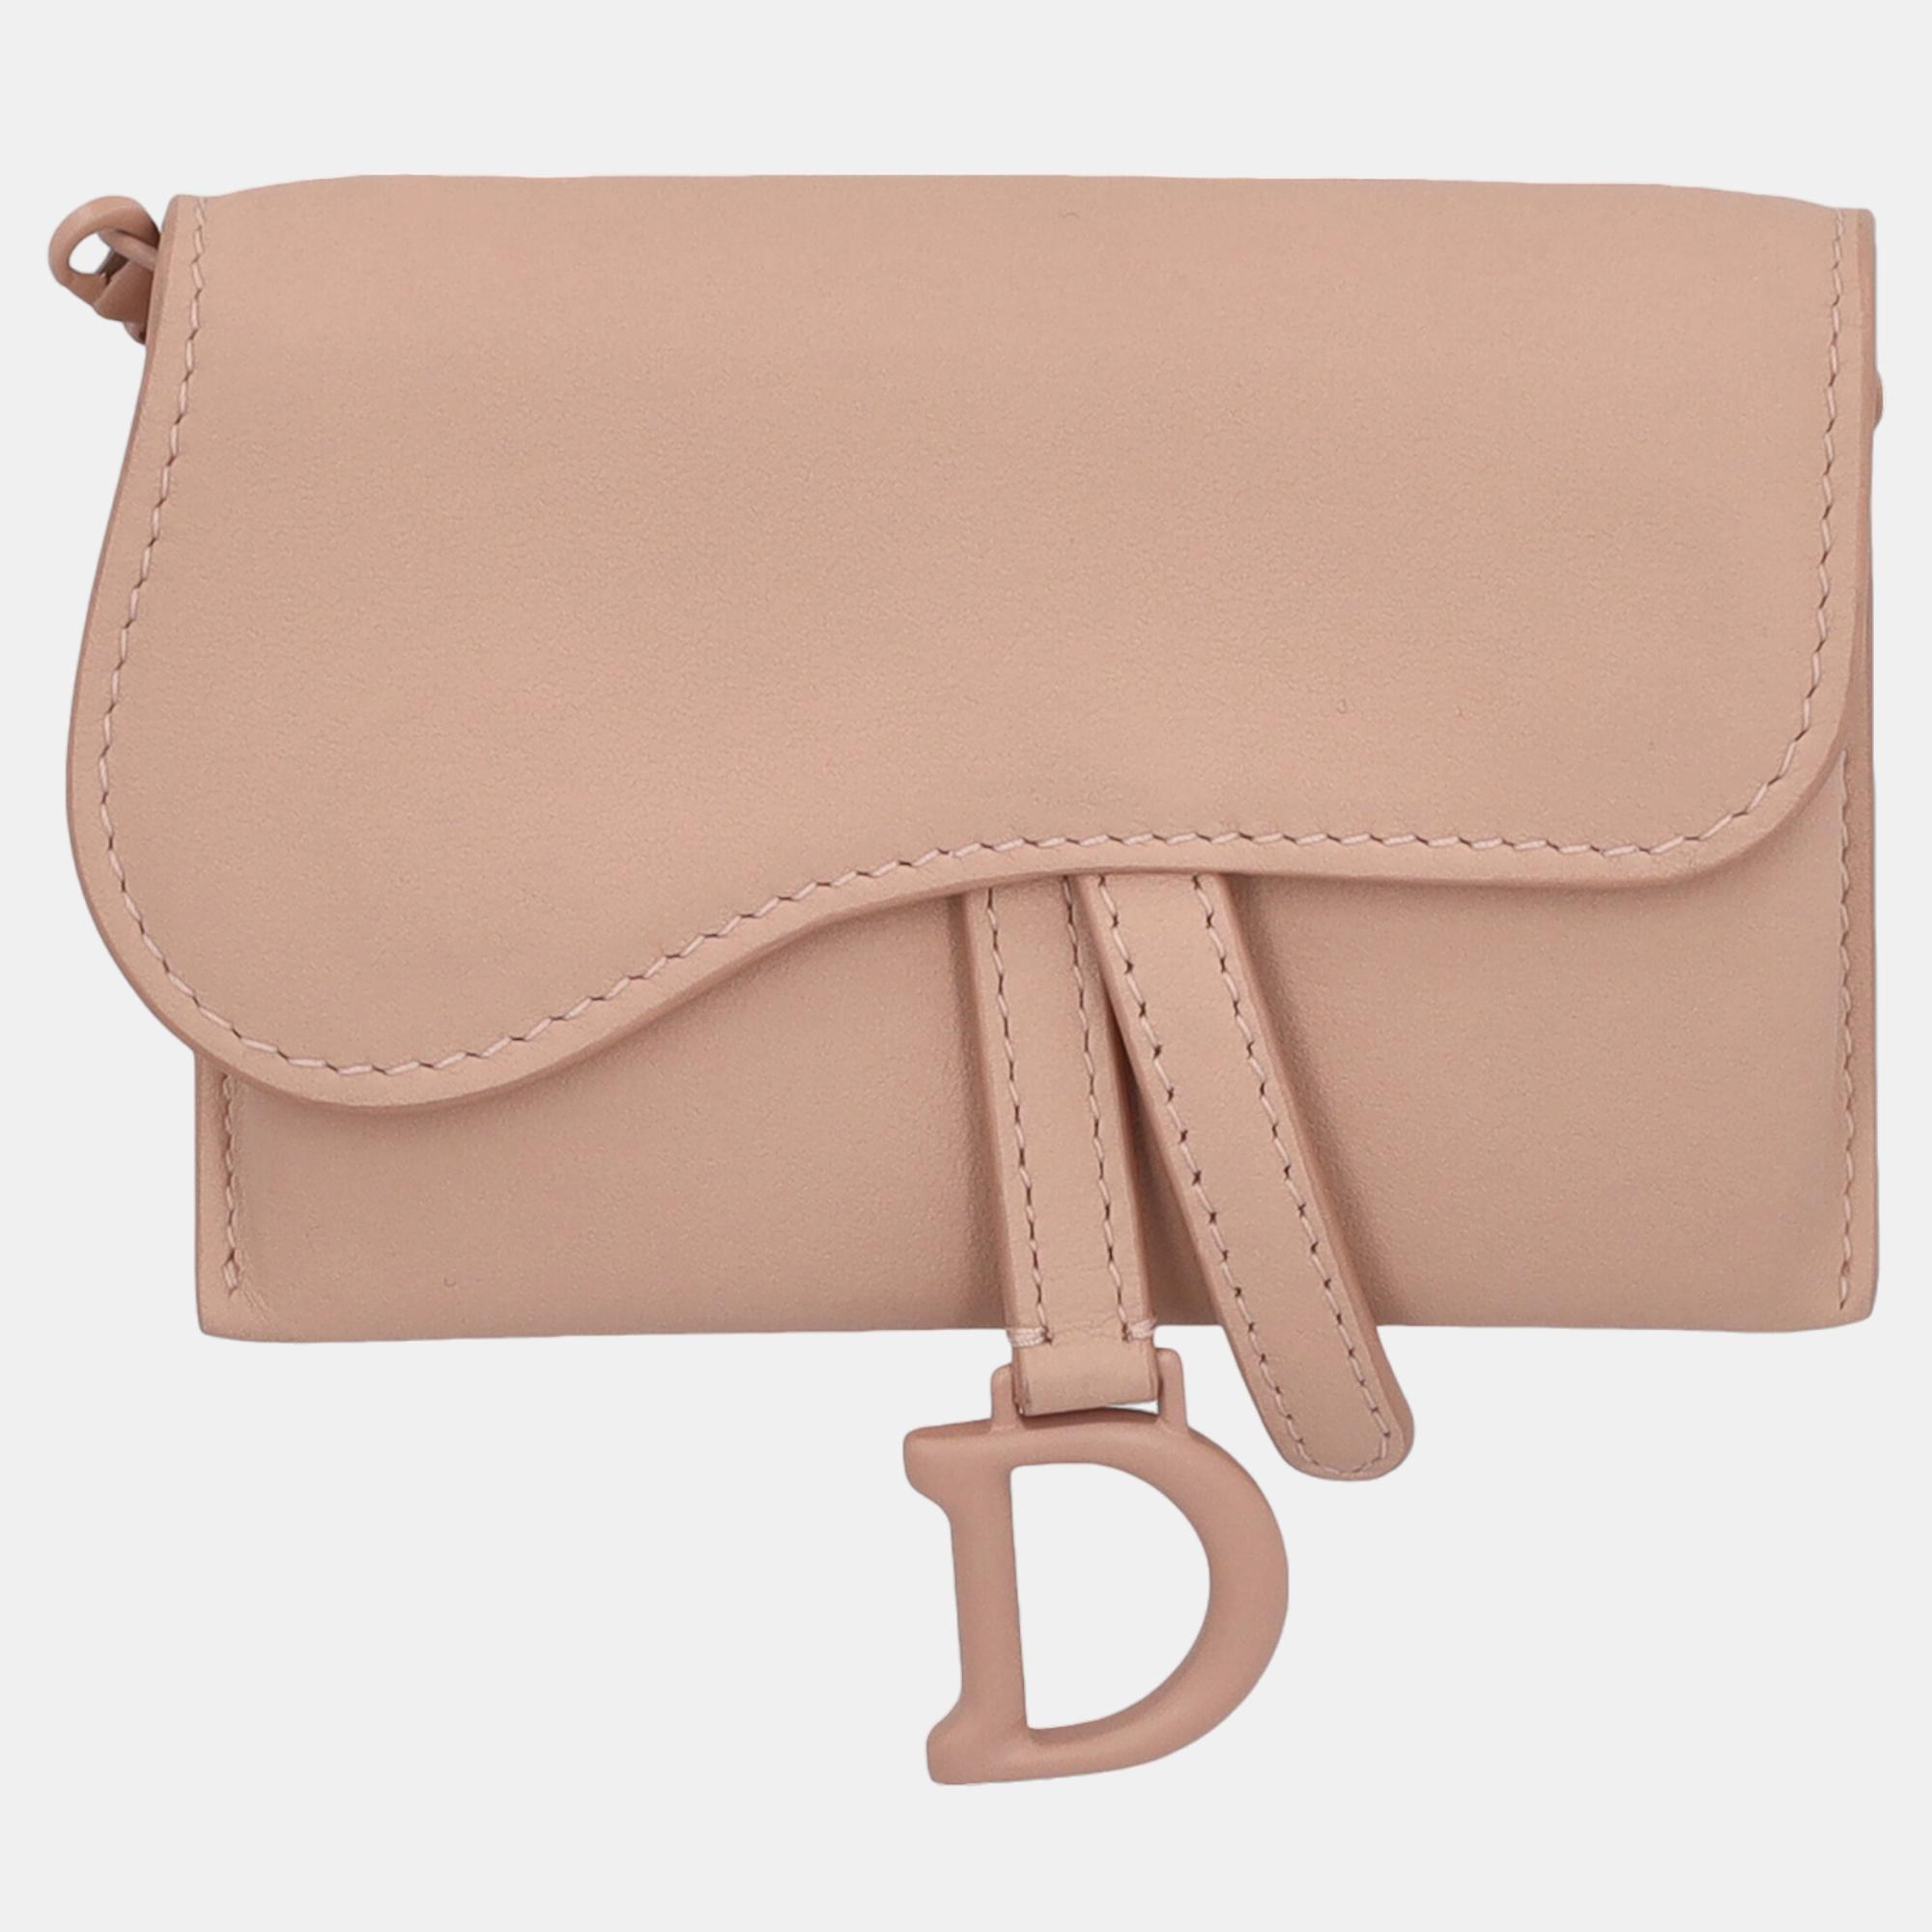 Dior Women's Leather Cross Body Bag - Beige - One Size